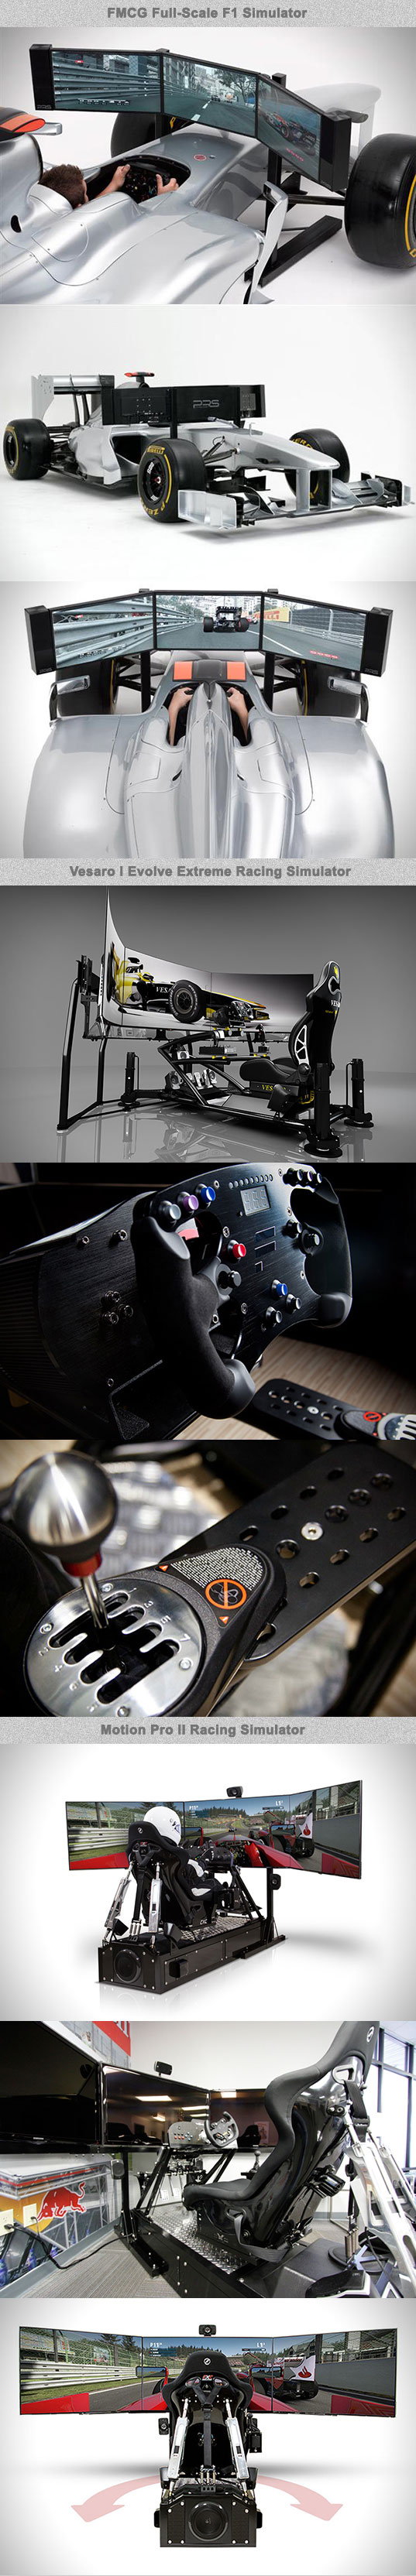  High-tech racing simulators